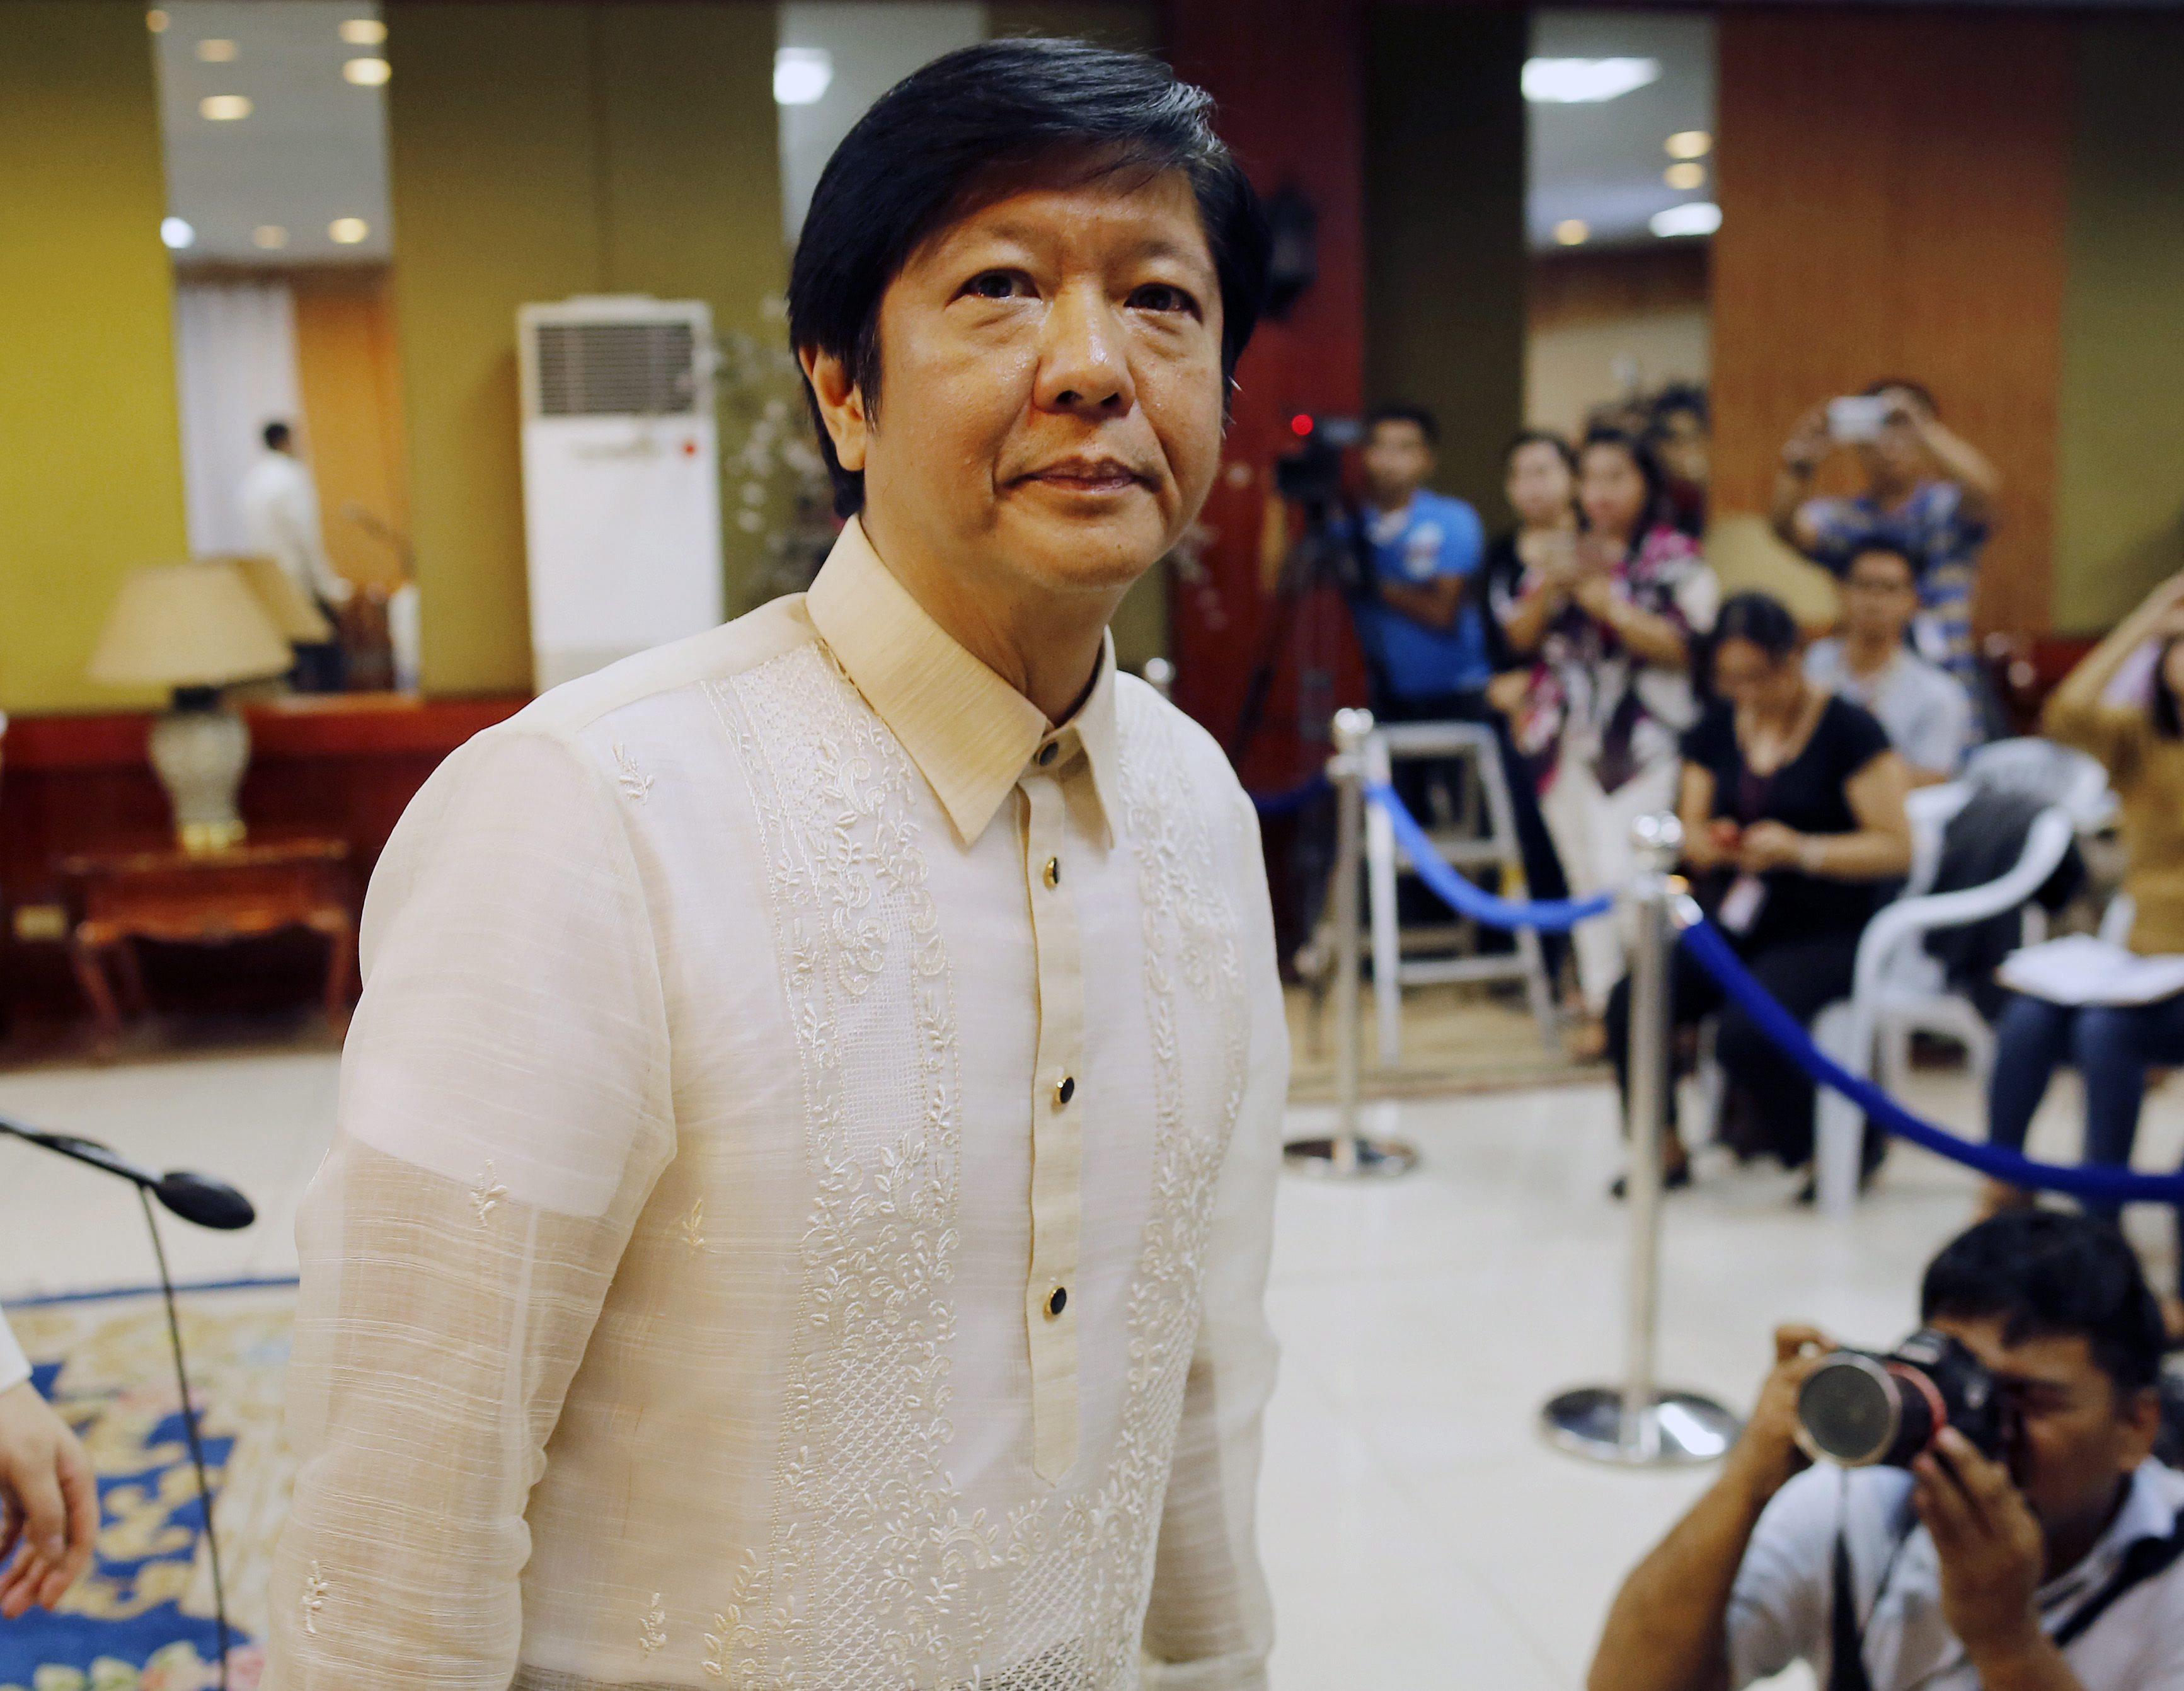 Ferdinand ‘Bongbong’ Marcos’ presidential bid has been beset by bizarre claims. File photo: EPA